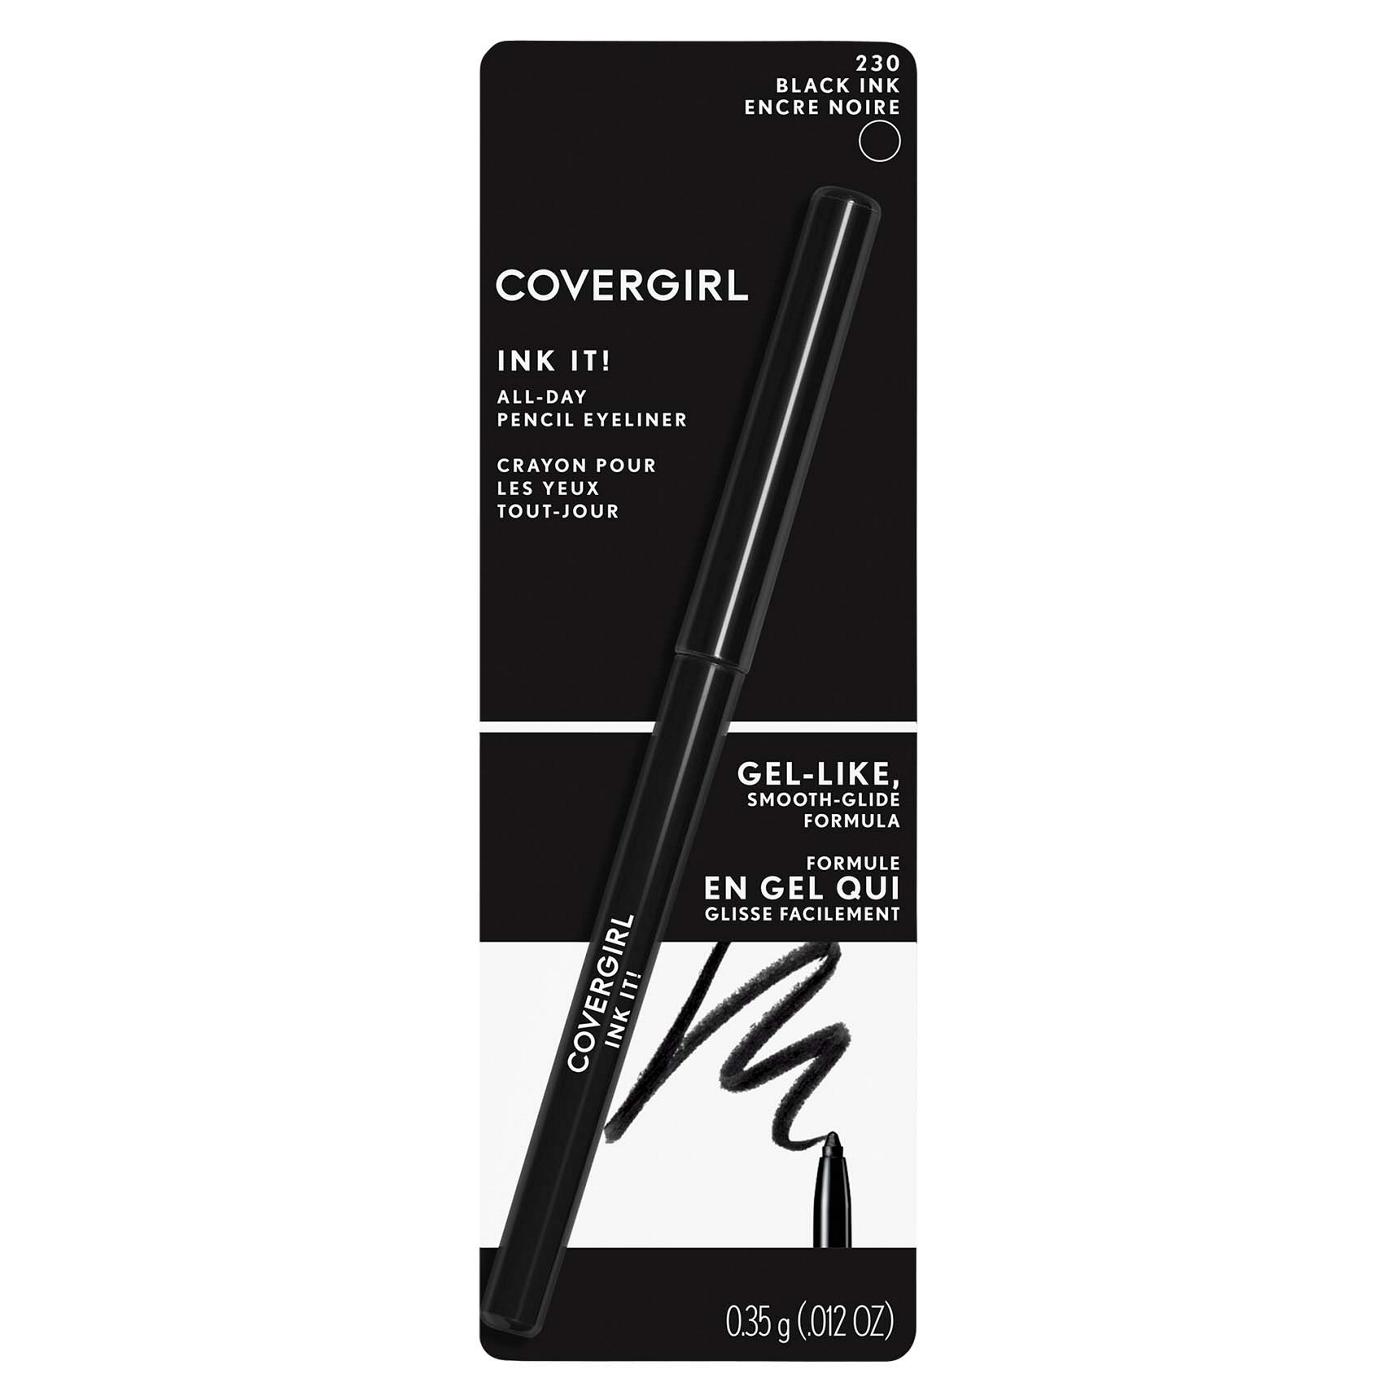 Covergirl Ink It! Eyeliner 230 Black Ink; image 1 of 3